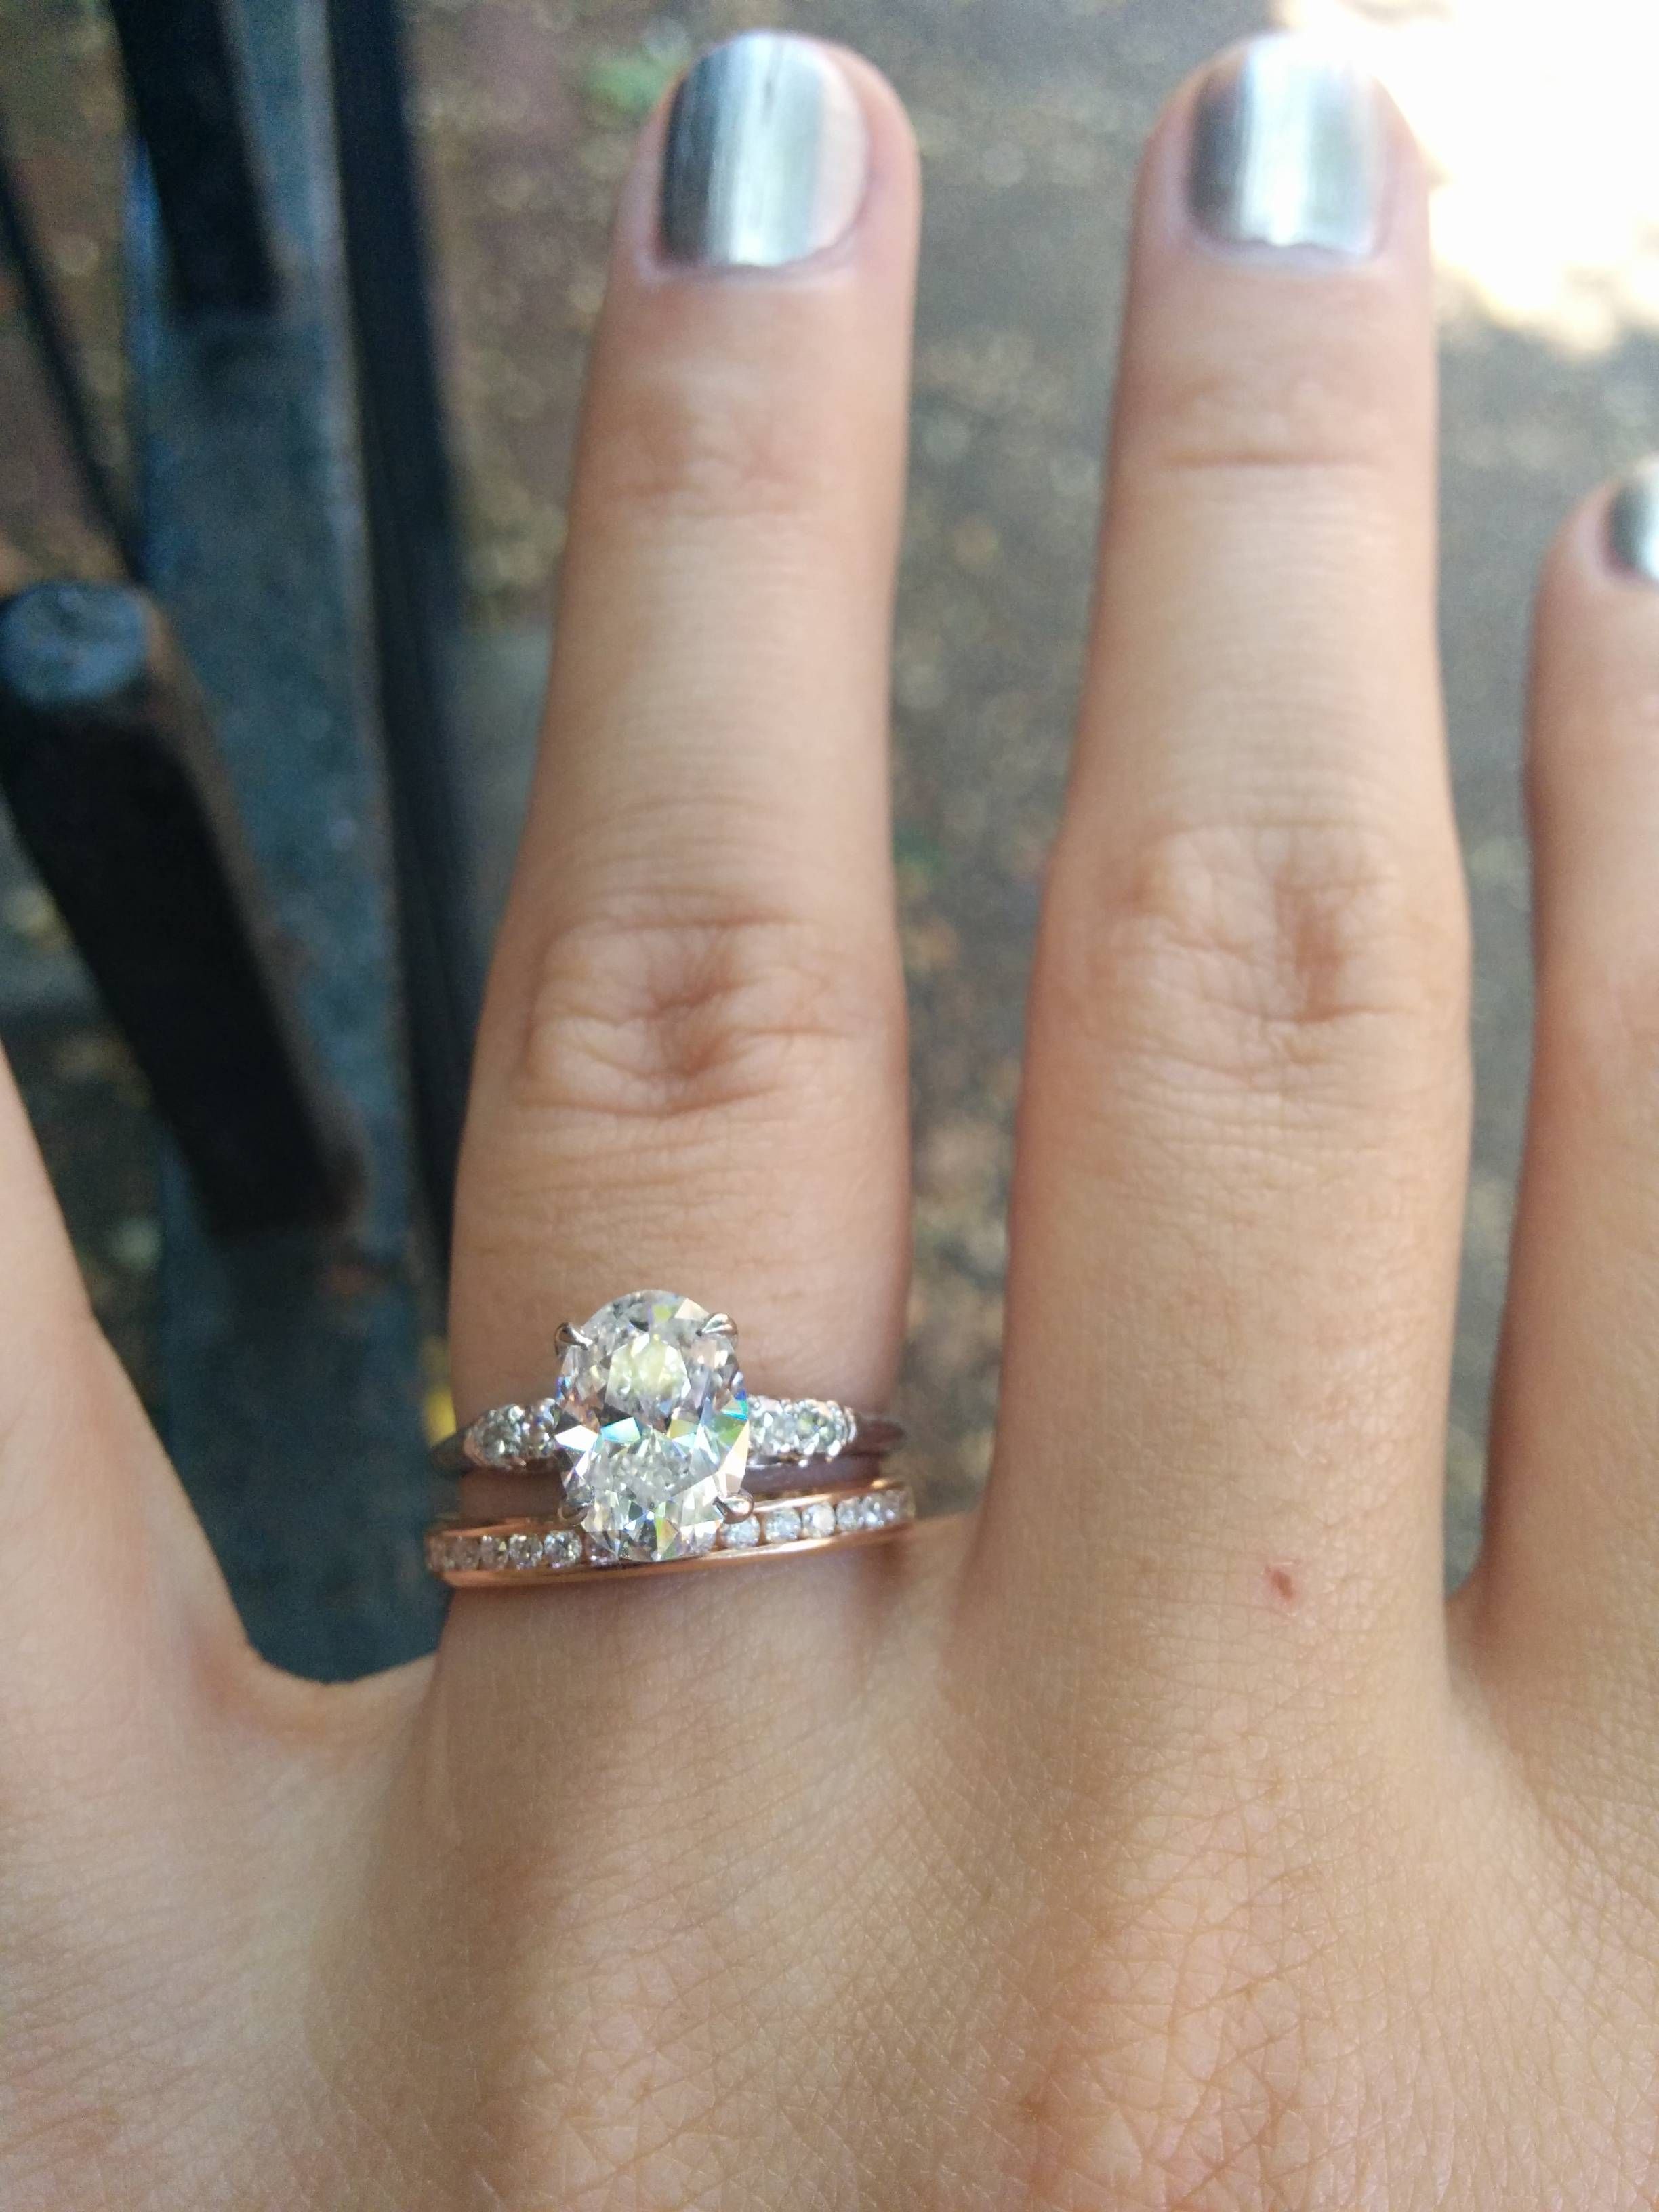 White Gold E Ring With Rose Gold Wedding Band – Weddingbee Regarding 2017 White Gold Engagement Rings With Rose Gold Wedding Bands (View 7 of 15)